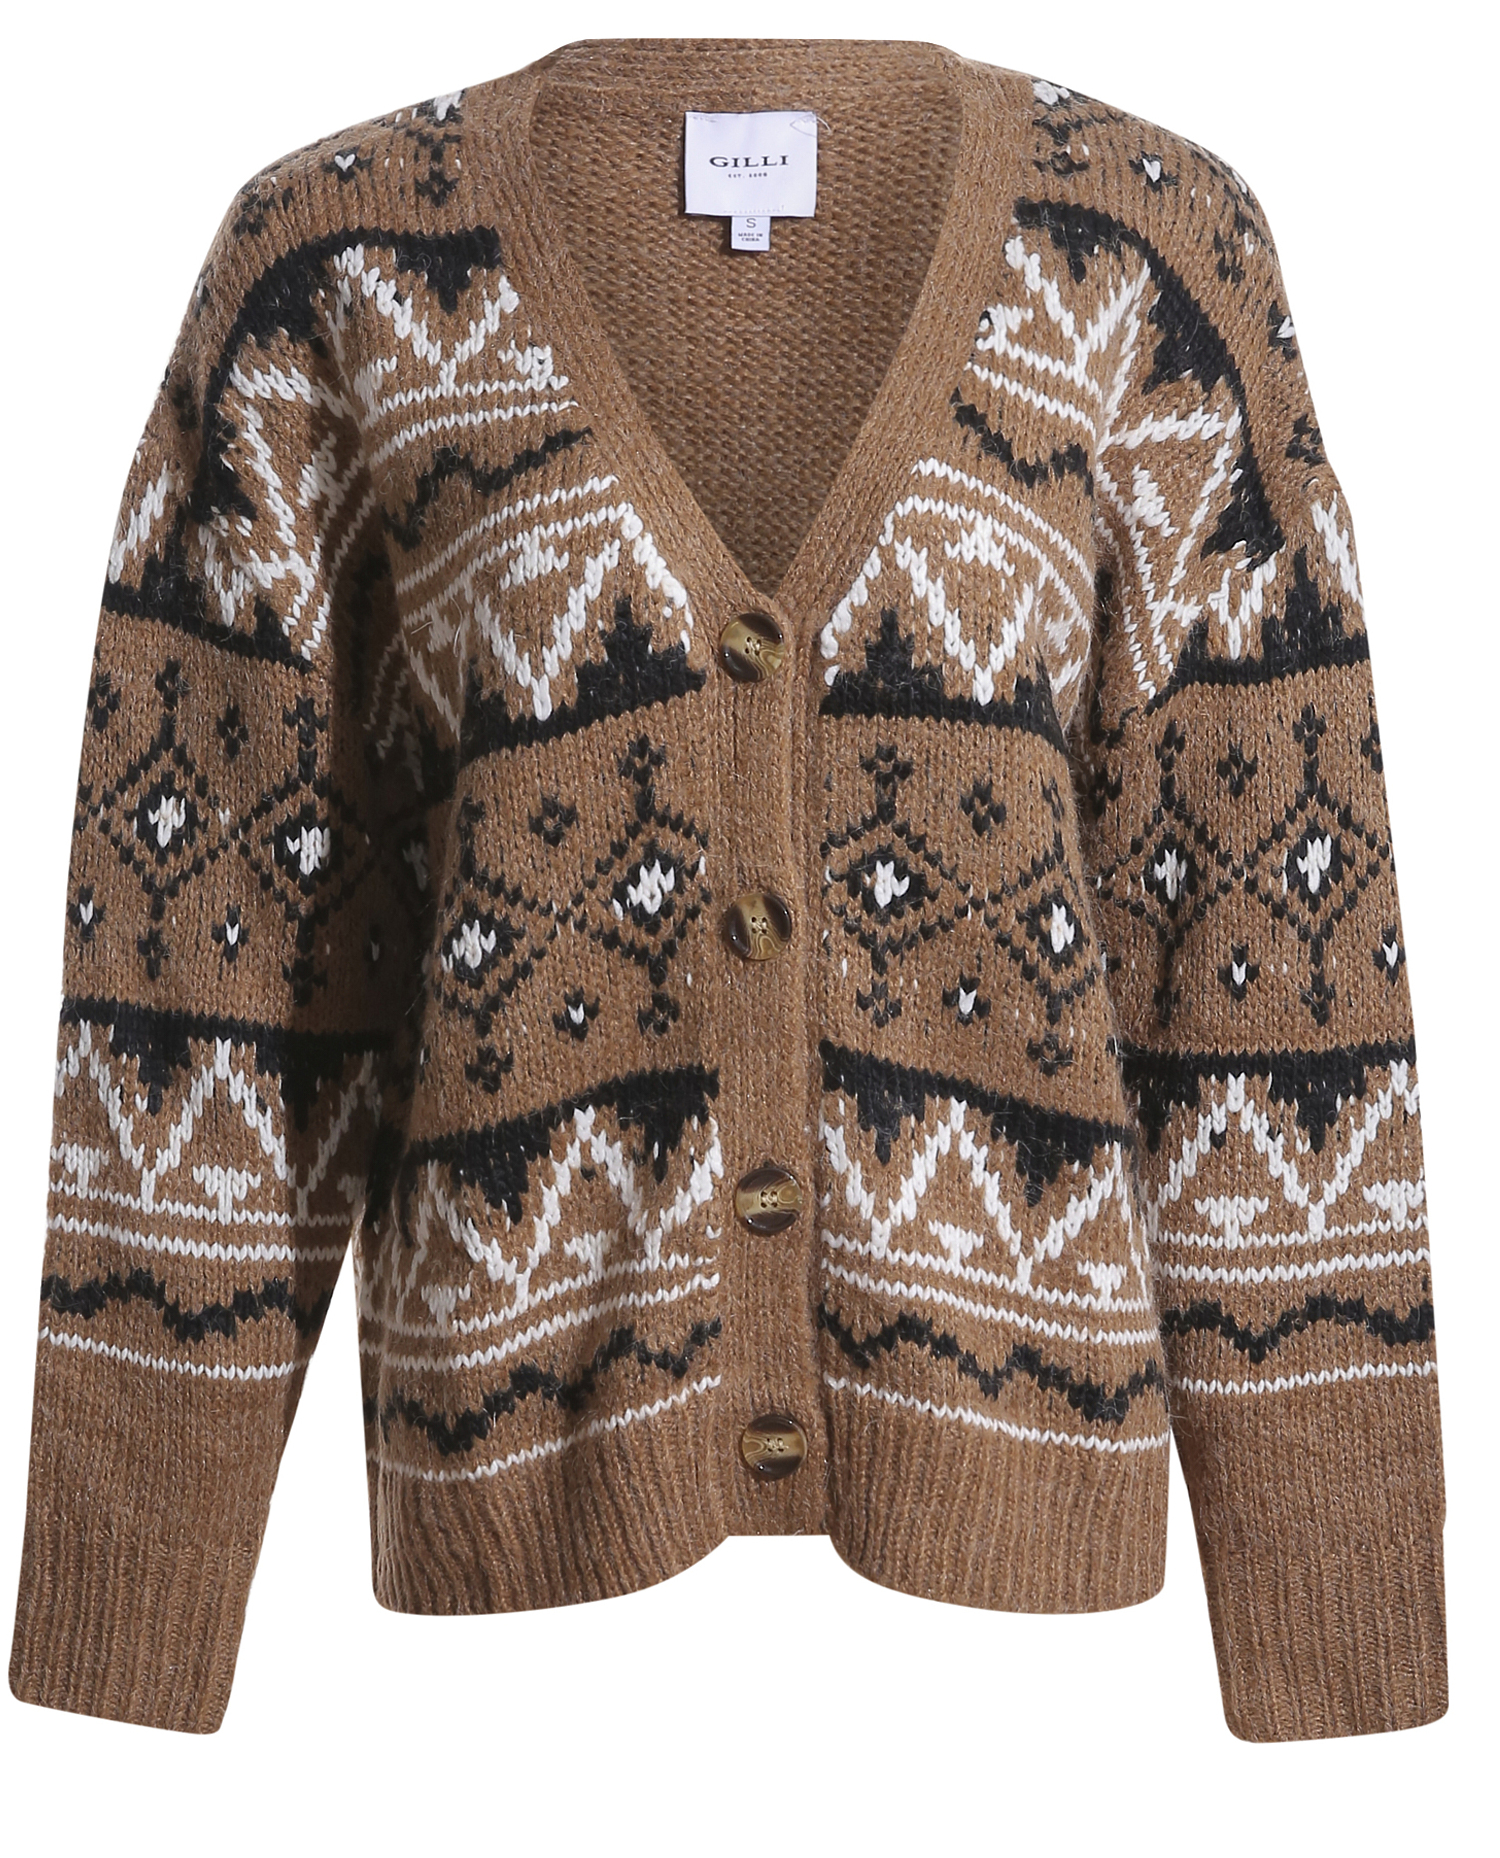 Fairisle Pattern Cardigan Sweater